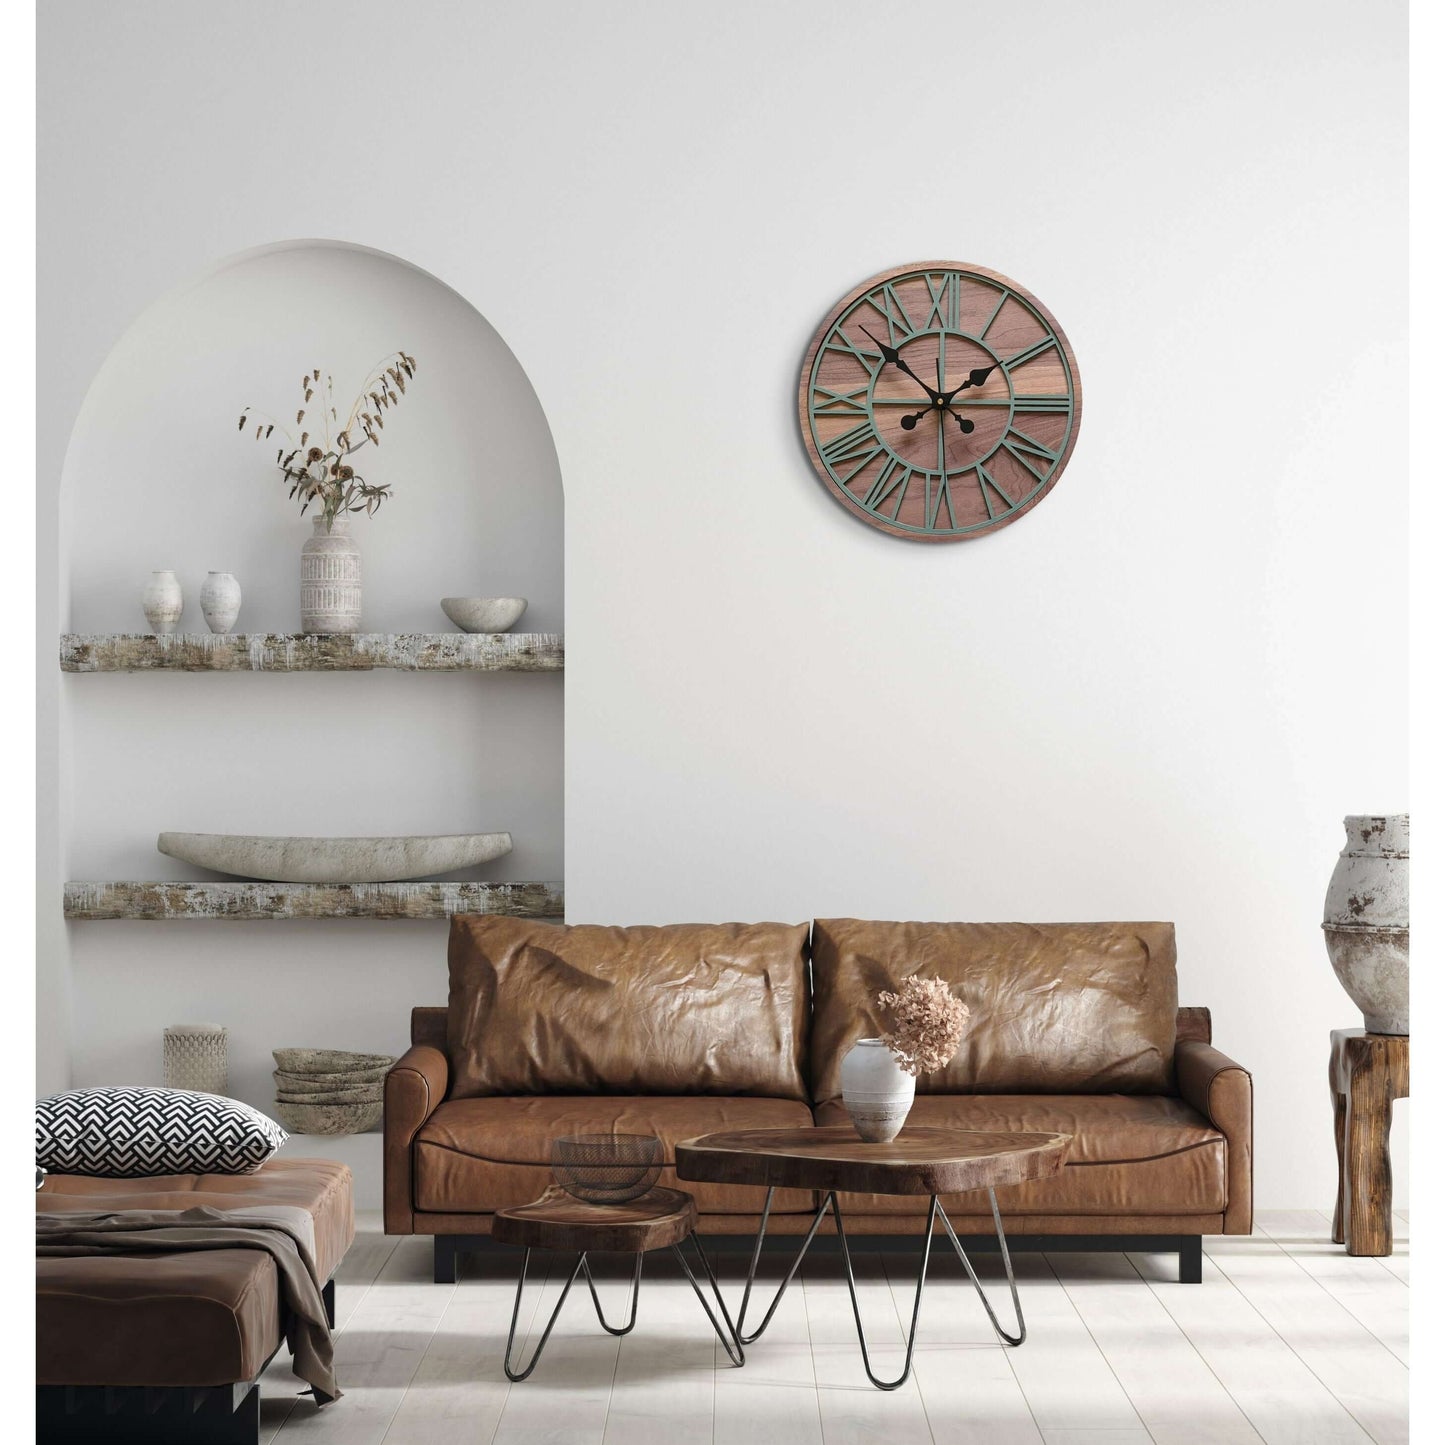 ClockDesignCo 100% Solid American Walnut Wall Clock | Skeleton Wall Clock | Large Round Clock | Kitchen Clock